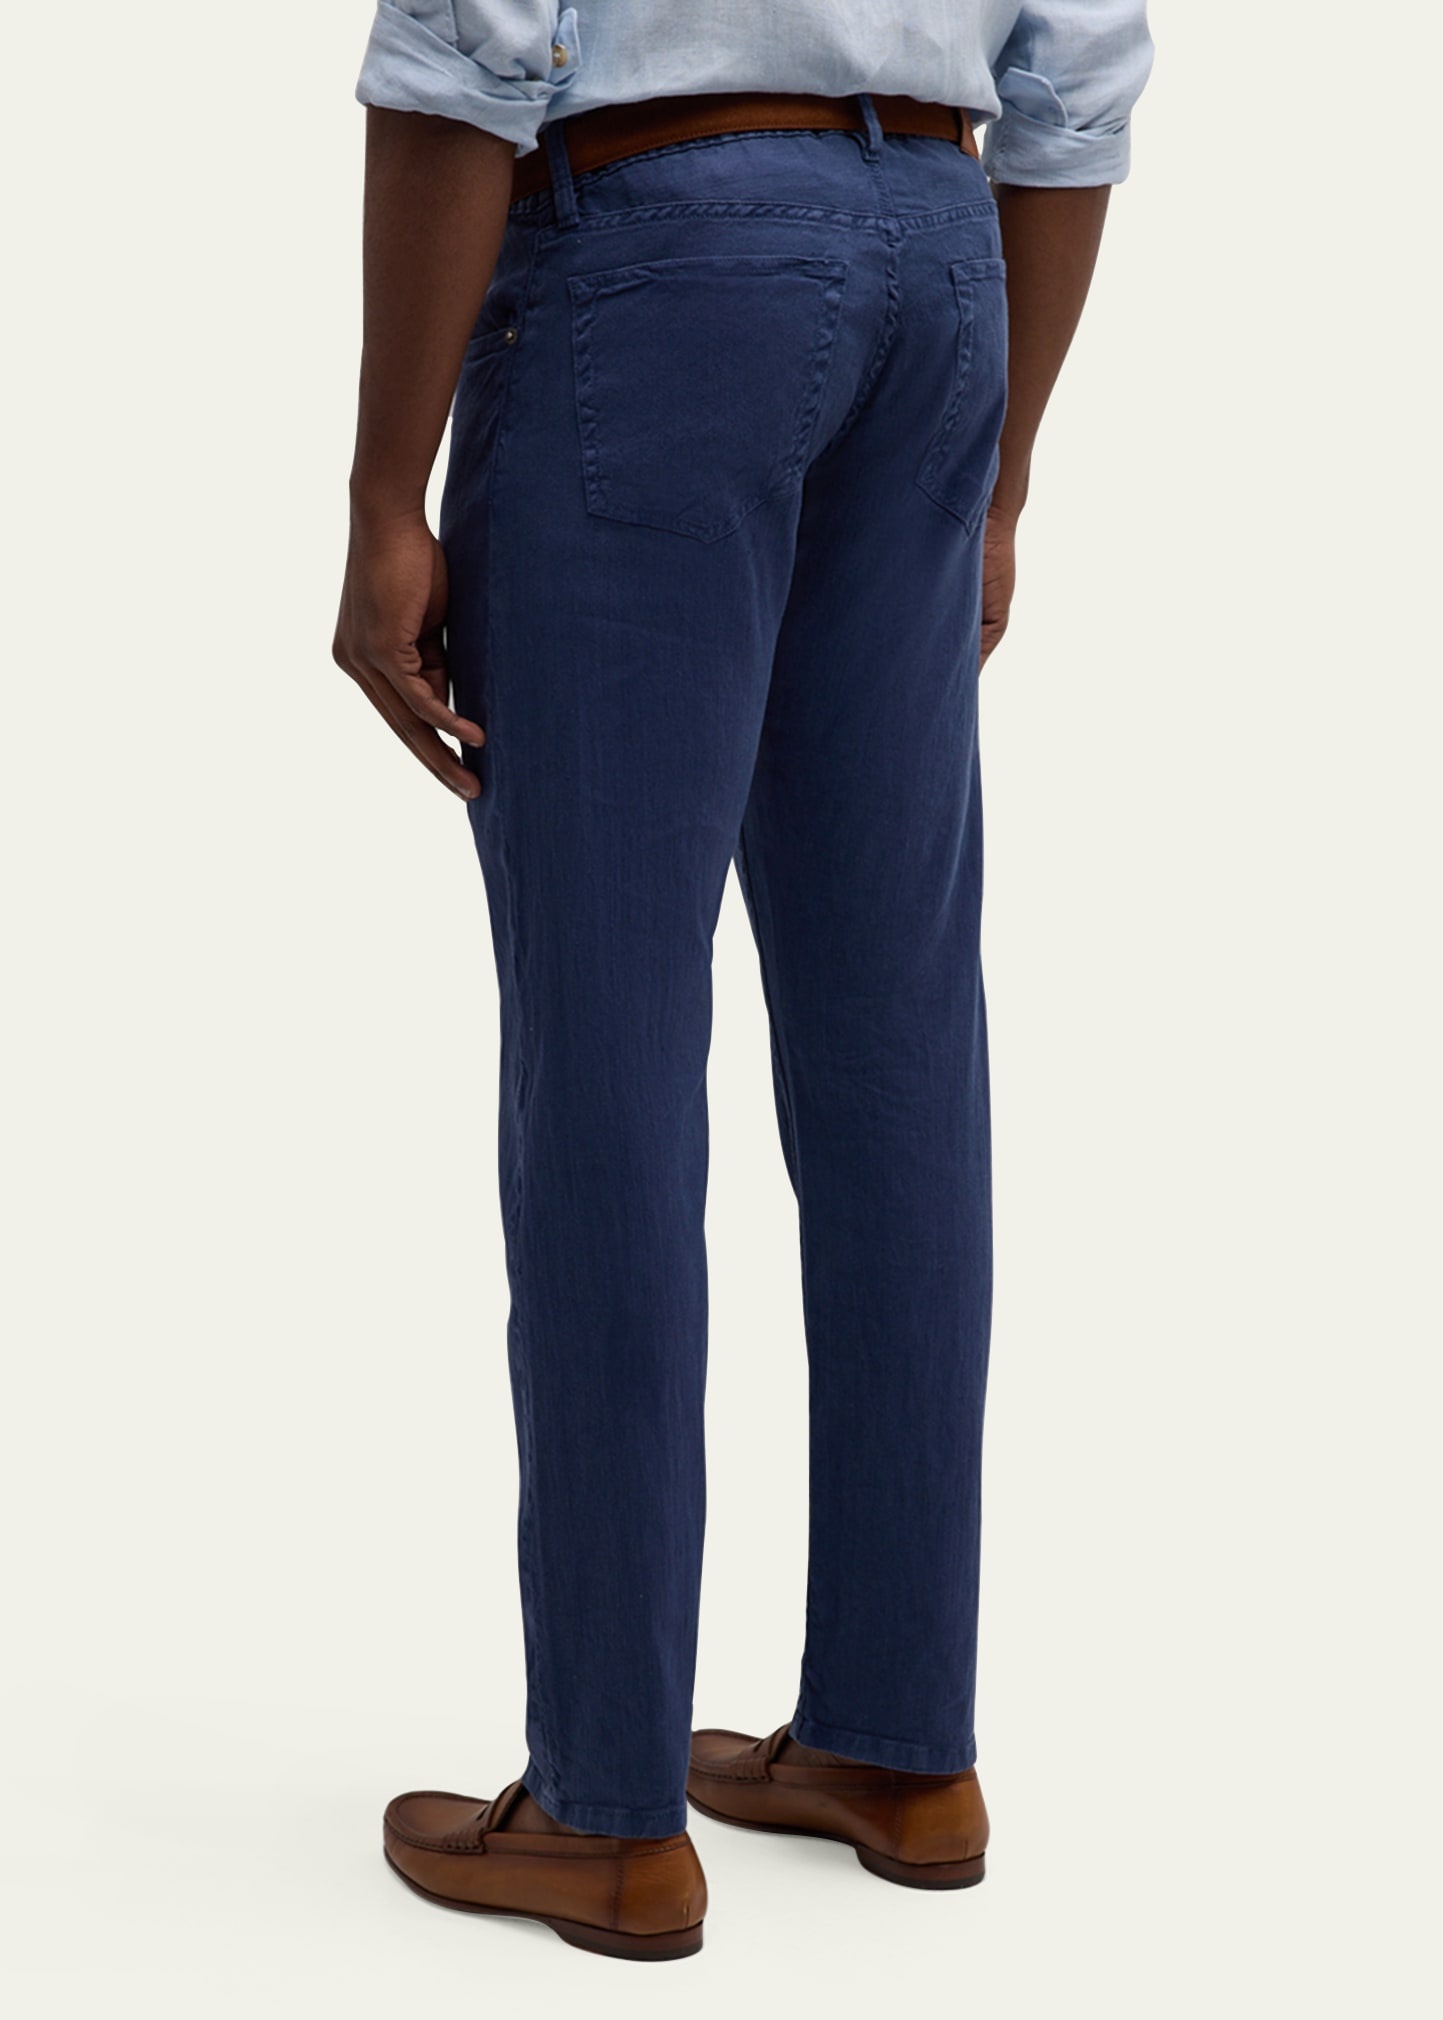 Men's Slim Stretch Linen and Cotton Jeans - 3